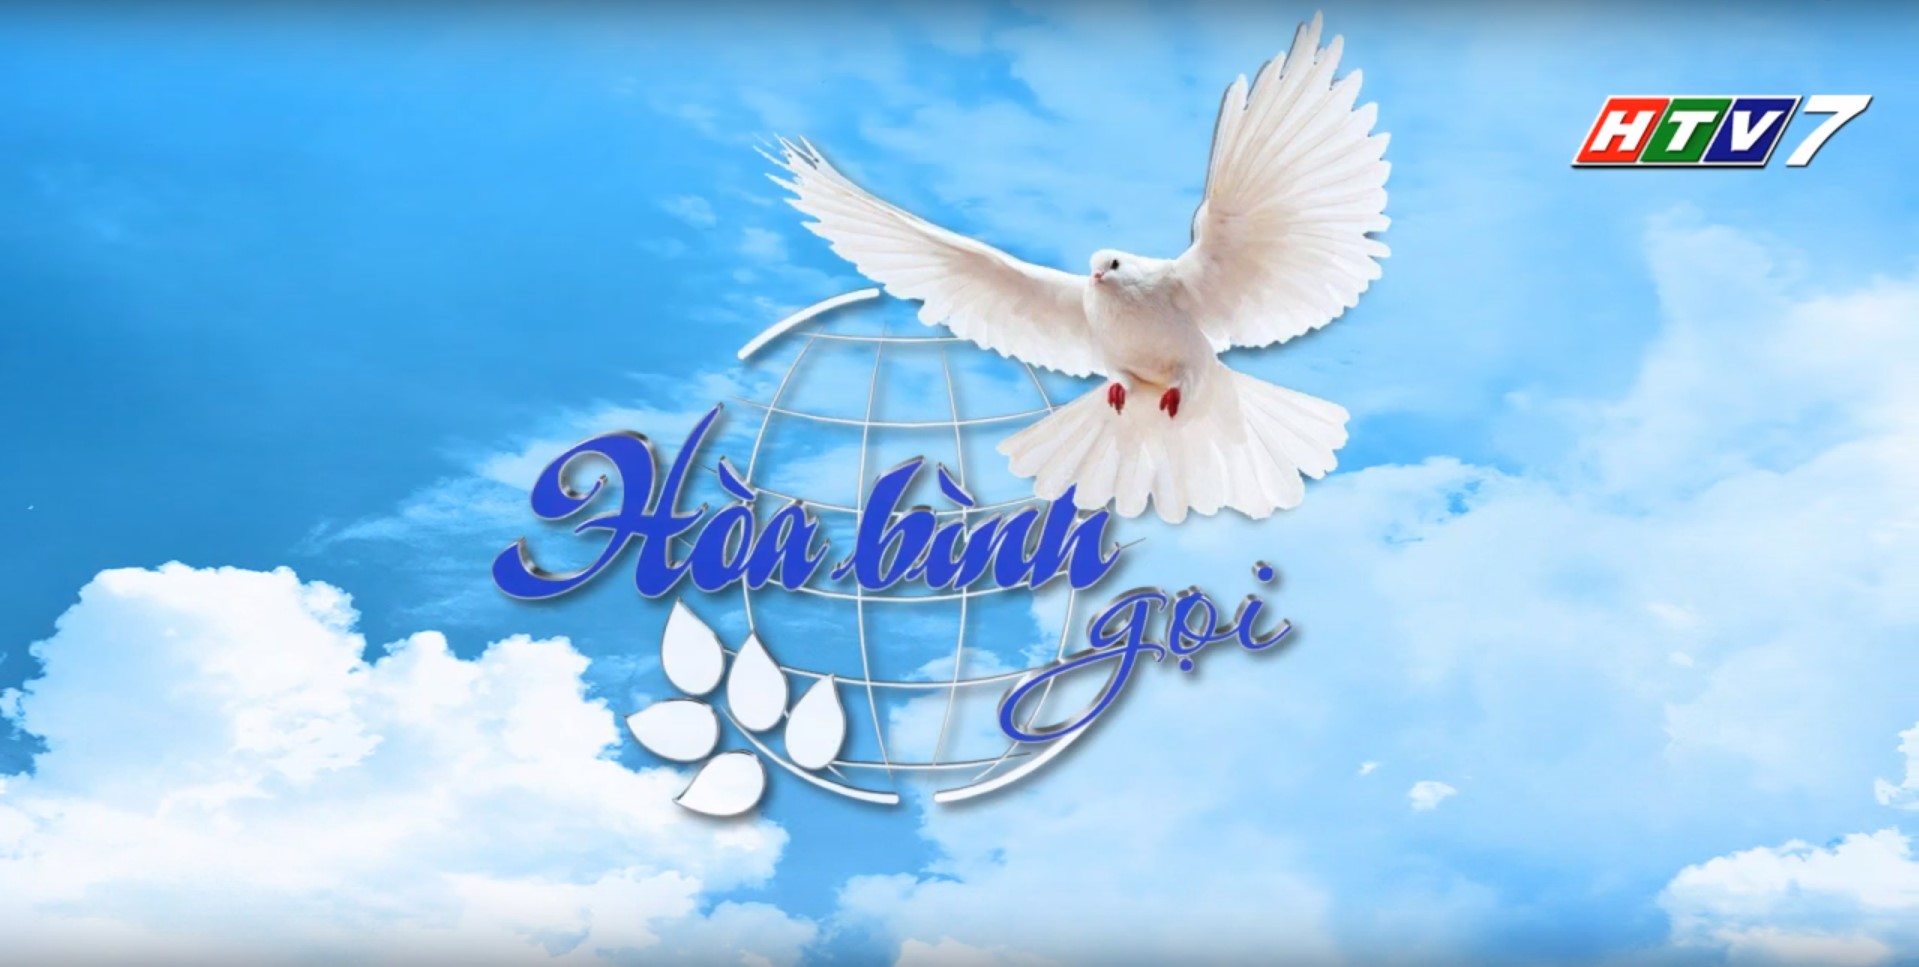 Program call of peace HTV7